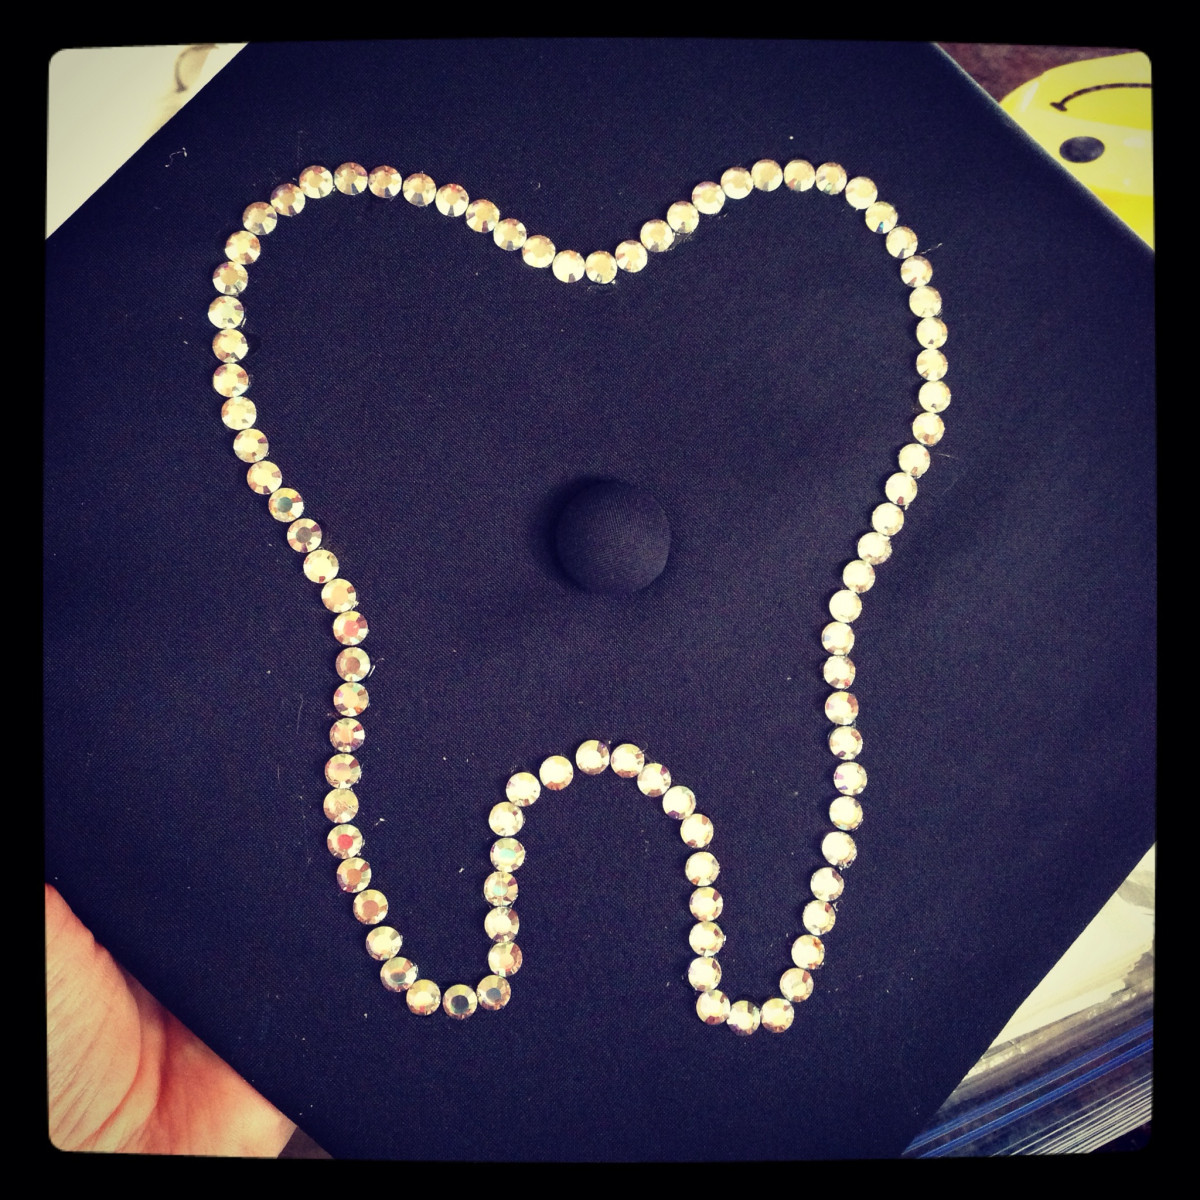 Dental School Graduation Gift Ideas For Her
 Top 25 Dental Hygienist Graduation Gift Ideas Best Gift